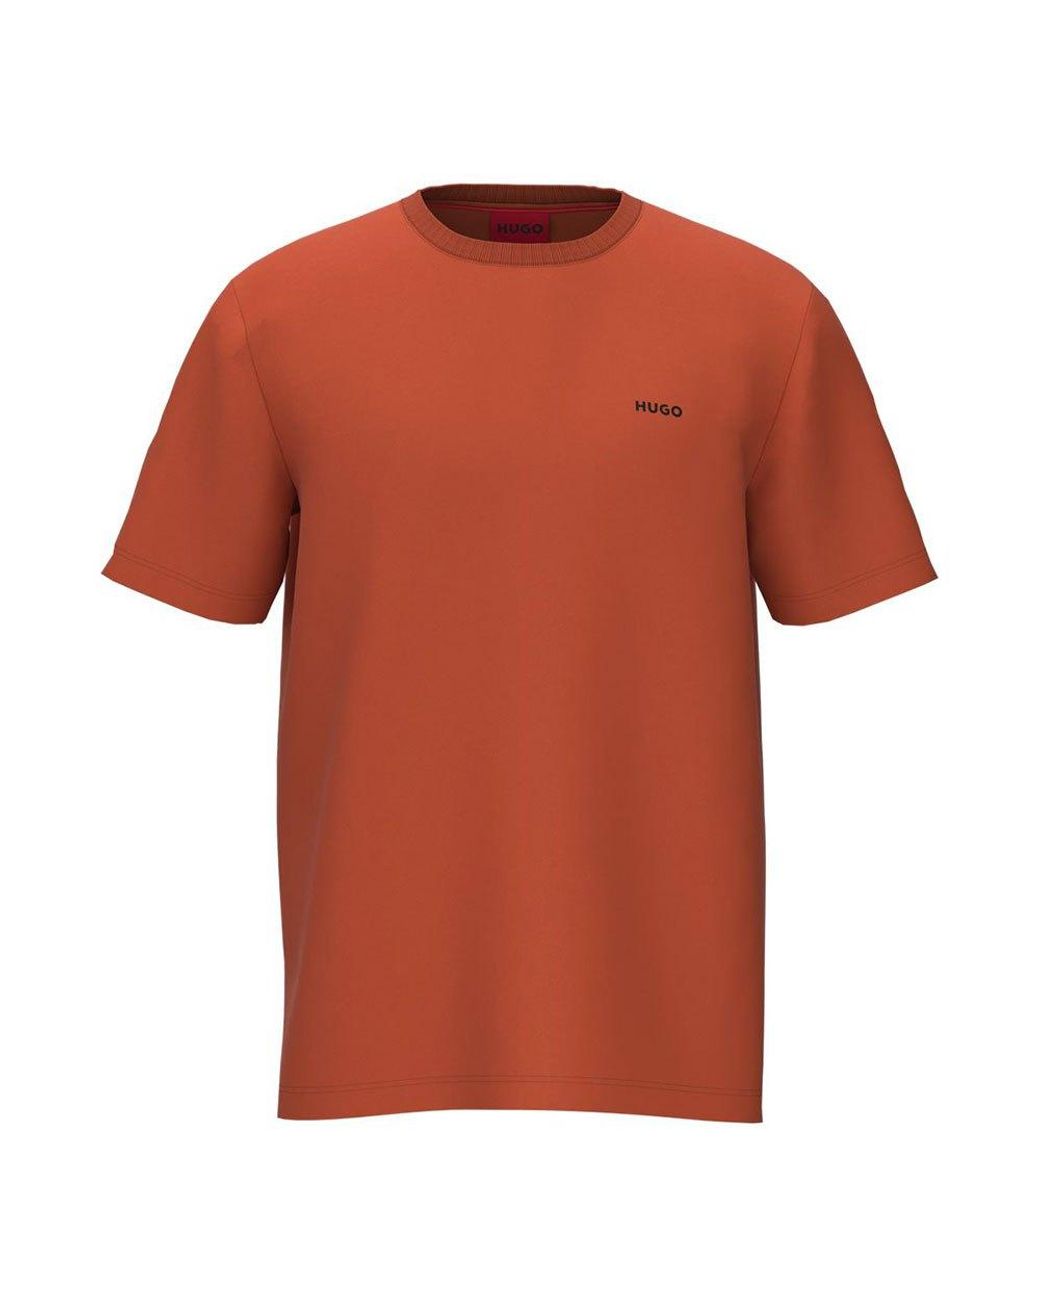 HUGO Dero T-hirt in Orange for Men | Lyst